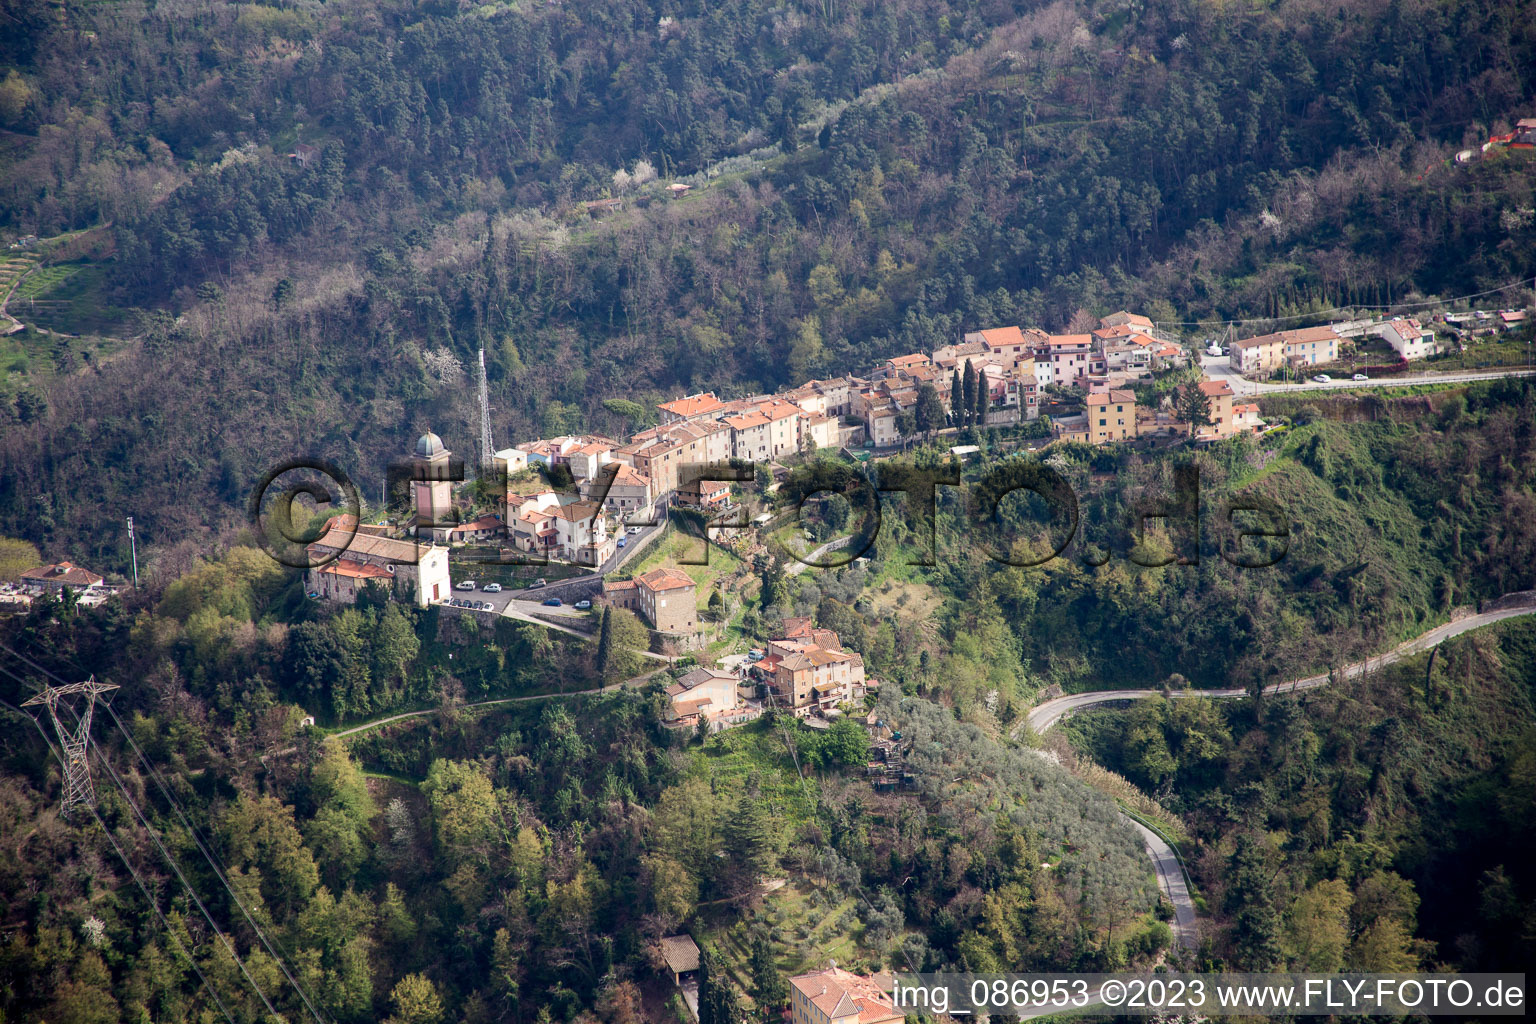 Pedona in the state Tuscany, Italy